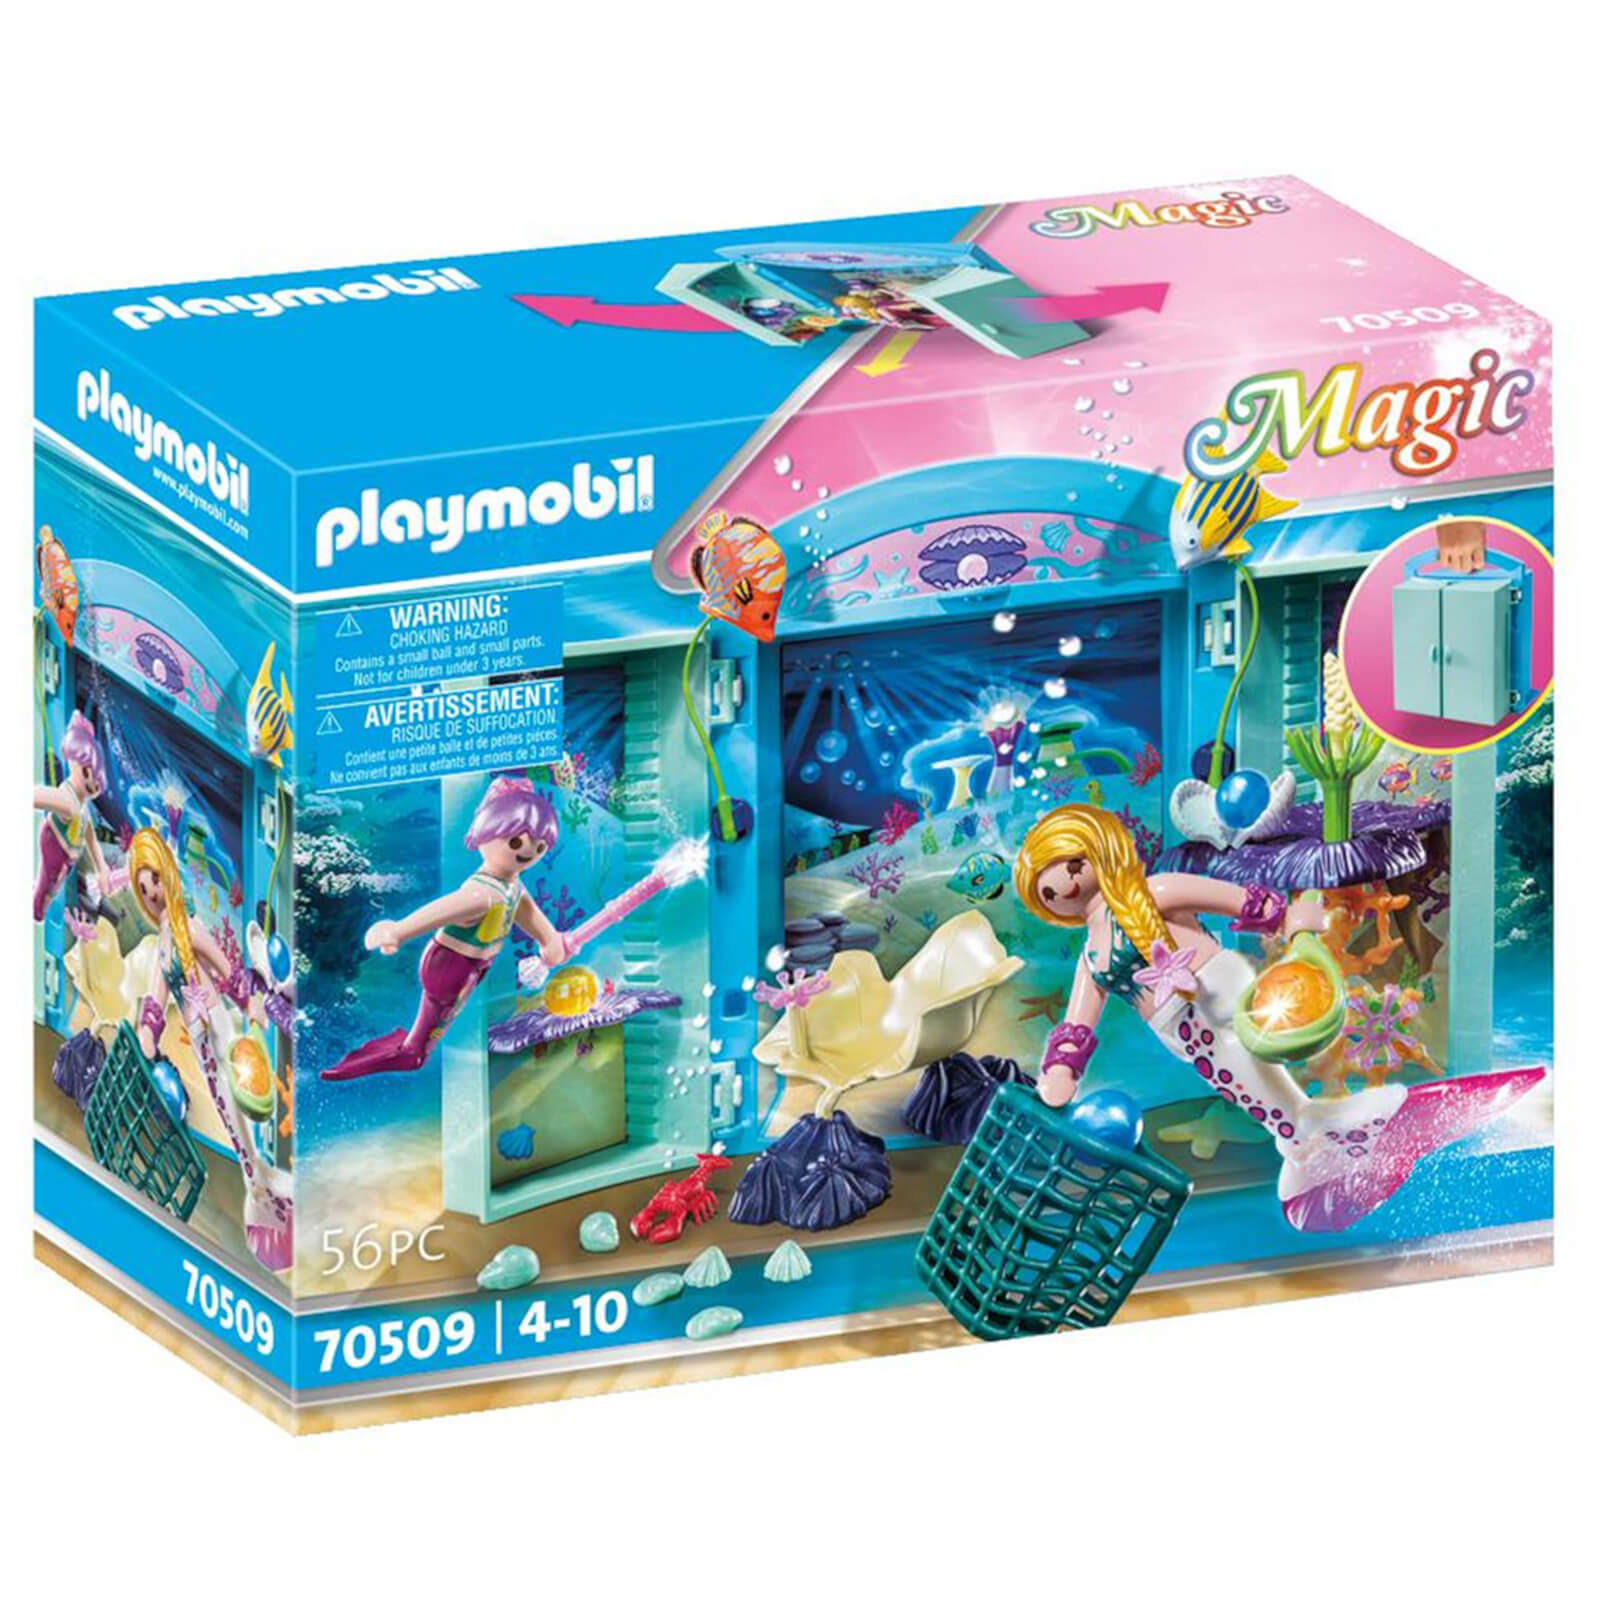 Playmobil Mermaids Play Box